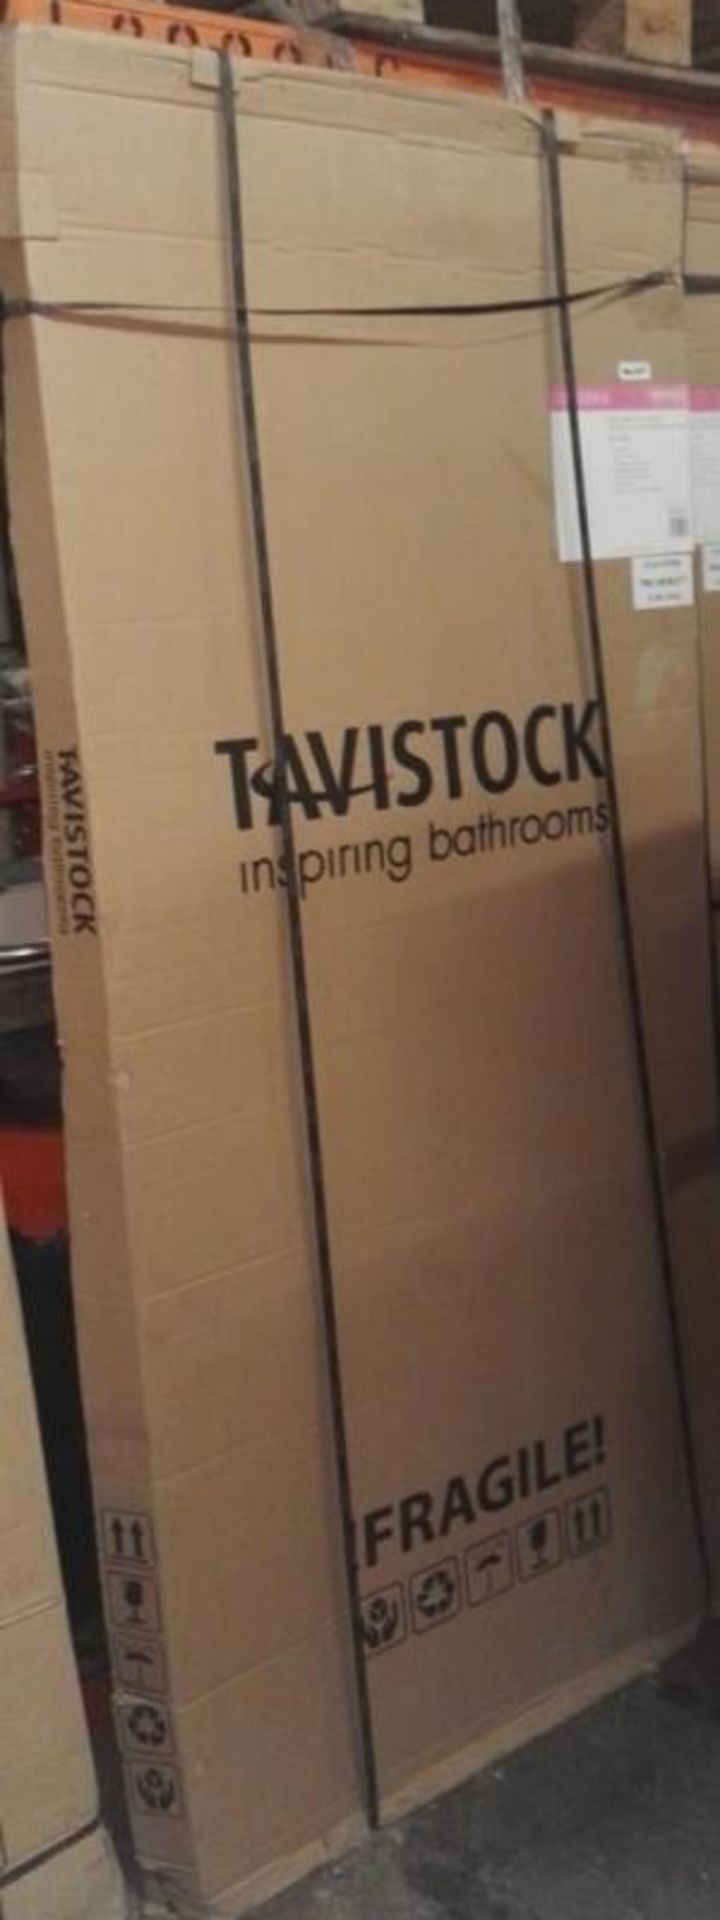 1 x Tavistock 'OXYGEN 8' Side Panel - Dimensions: 900 x 1950 - Ref: ma357B - New / Boxed Stock - CL0